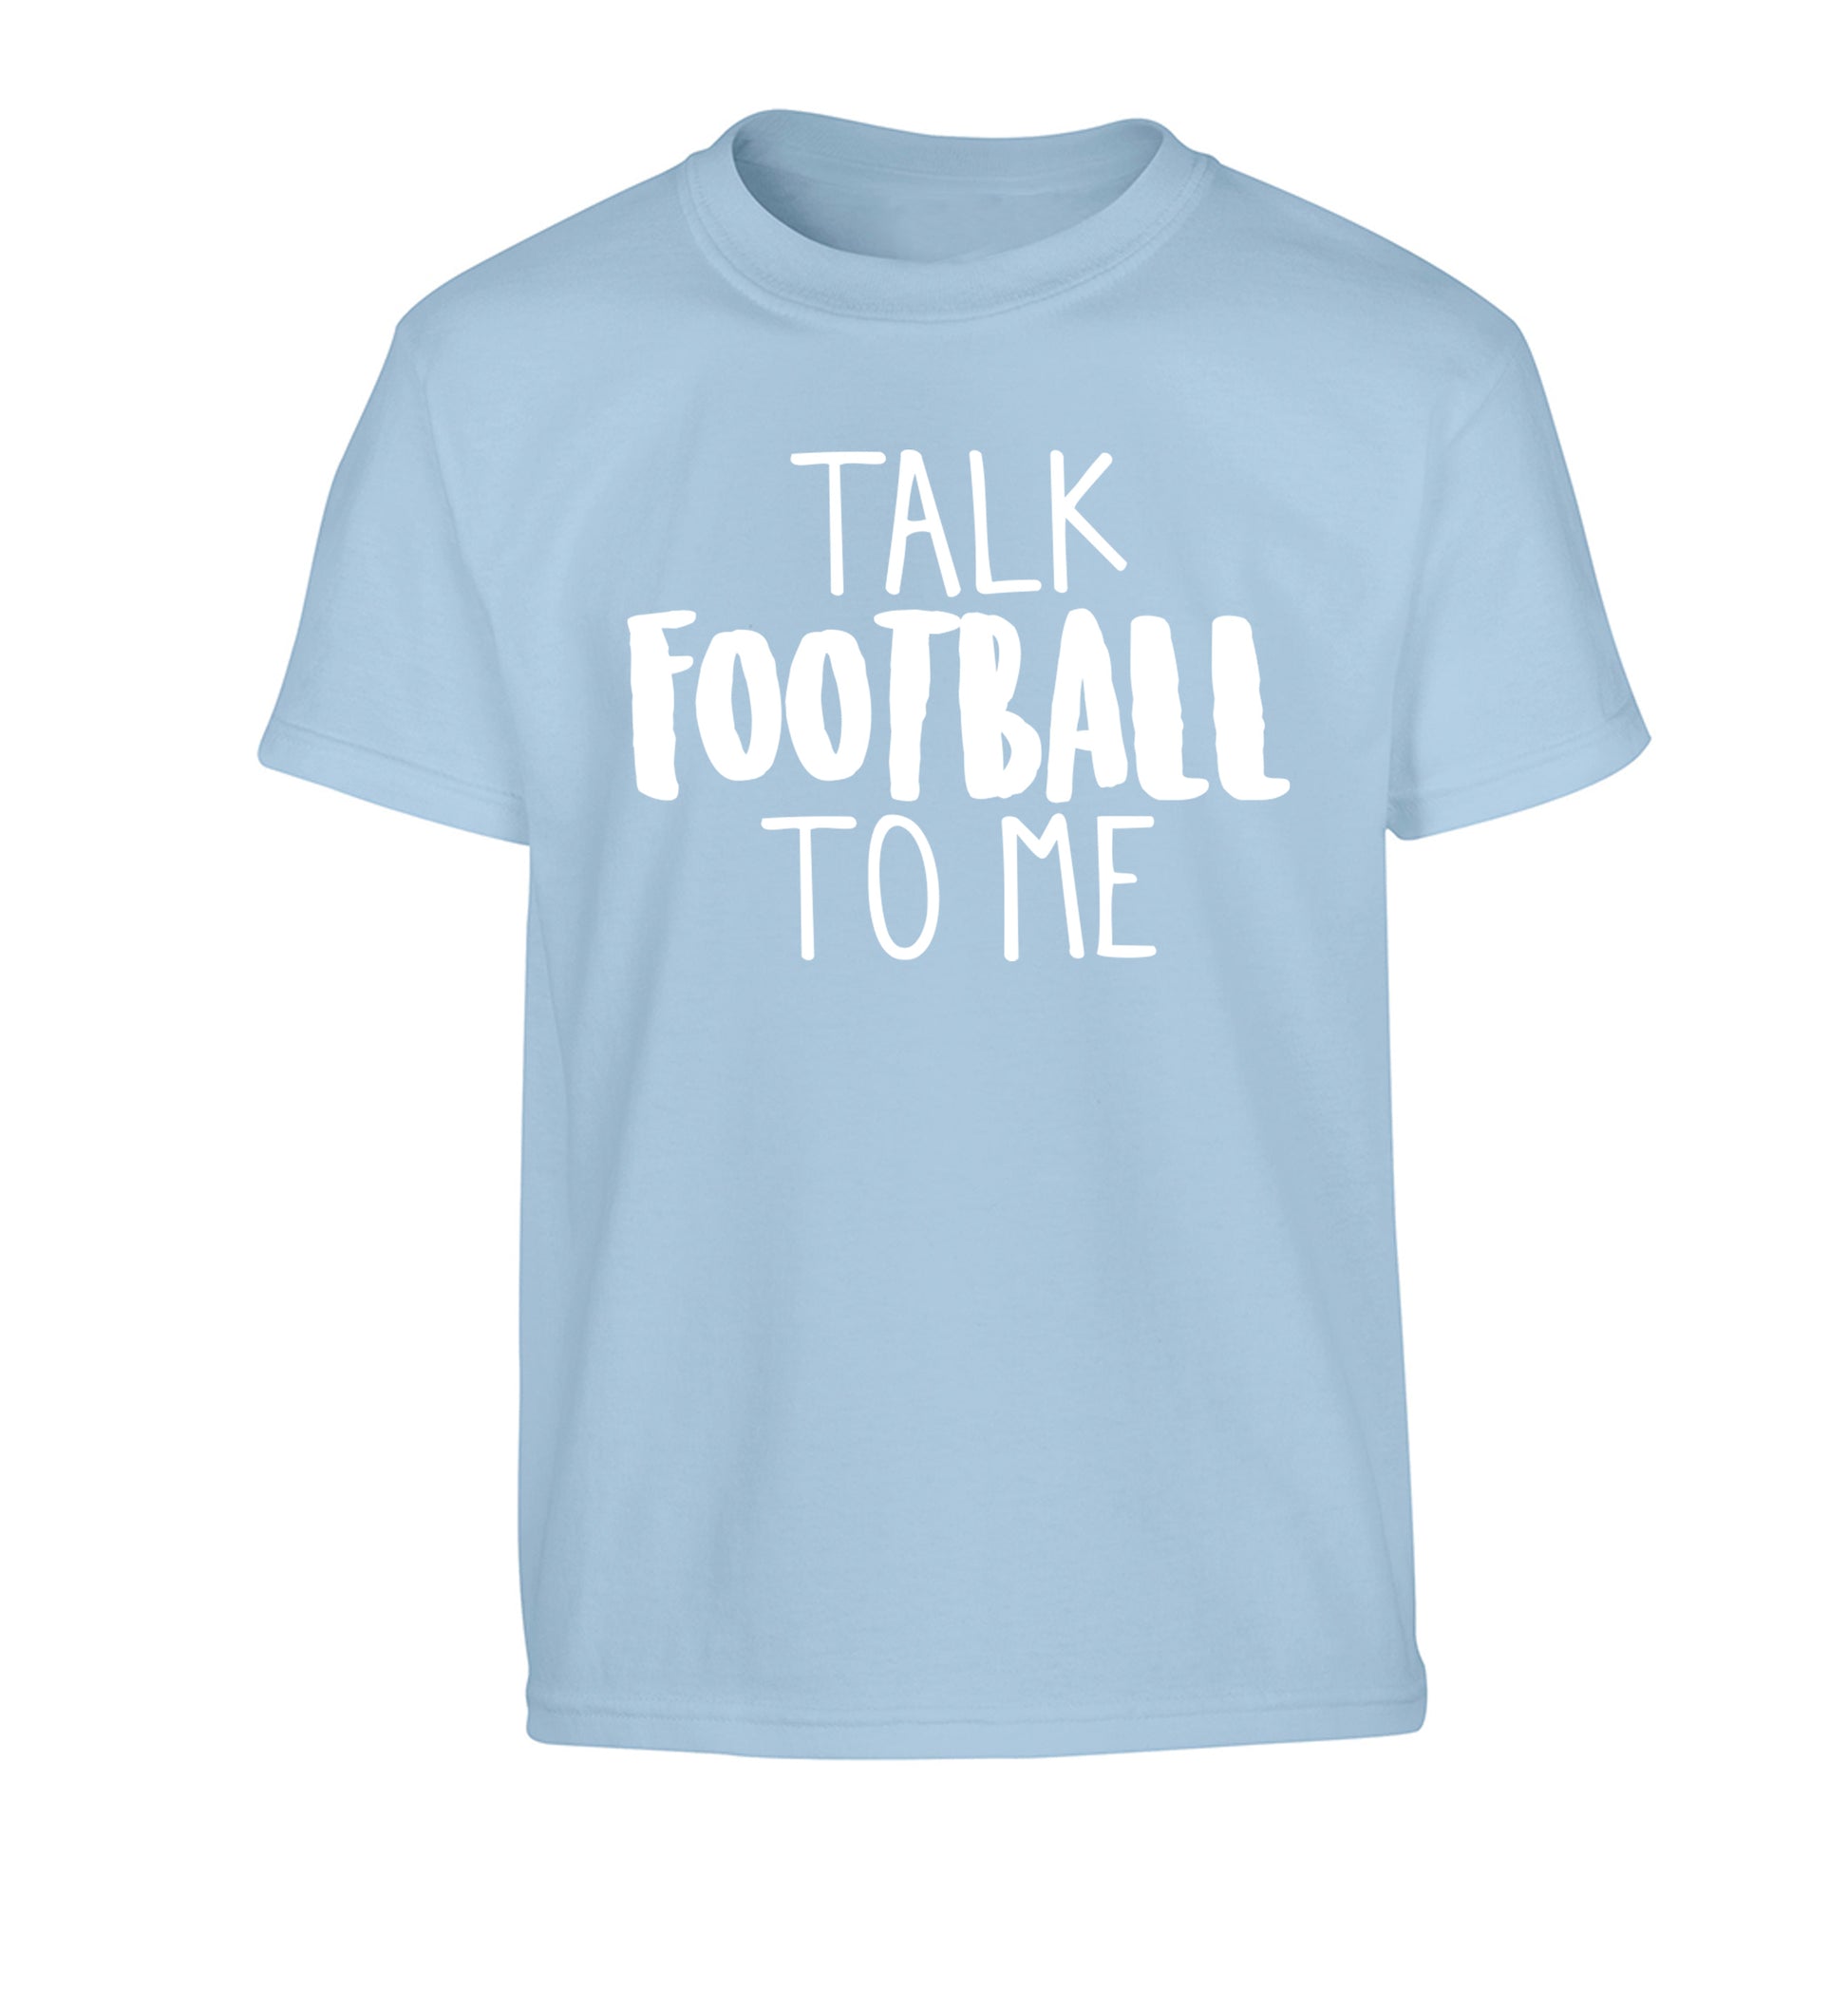 Talk football to me Children's light blue Tshirt 12-14 Years